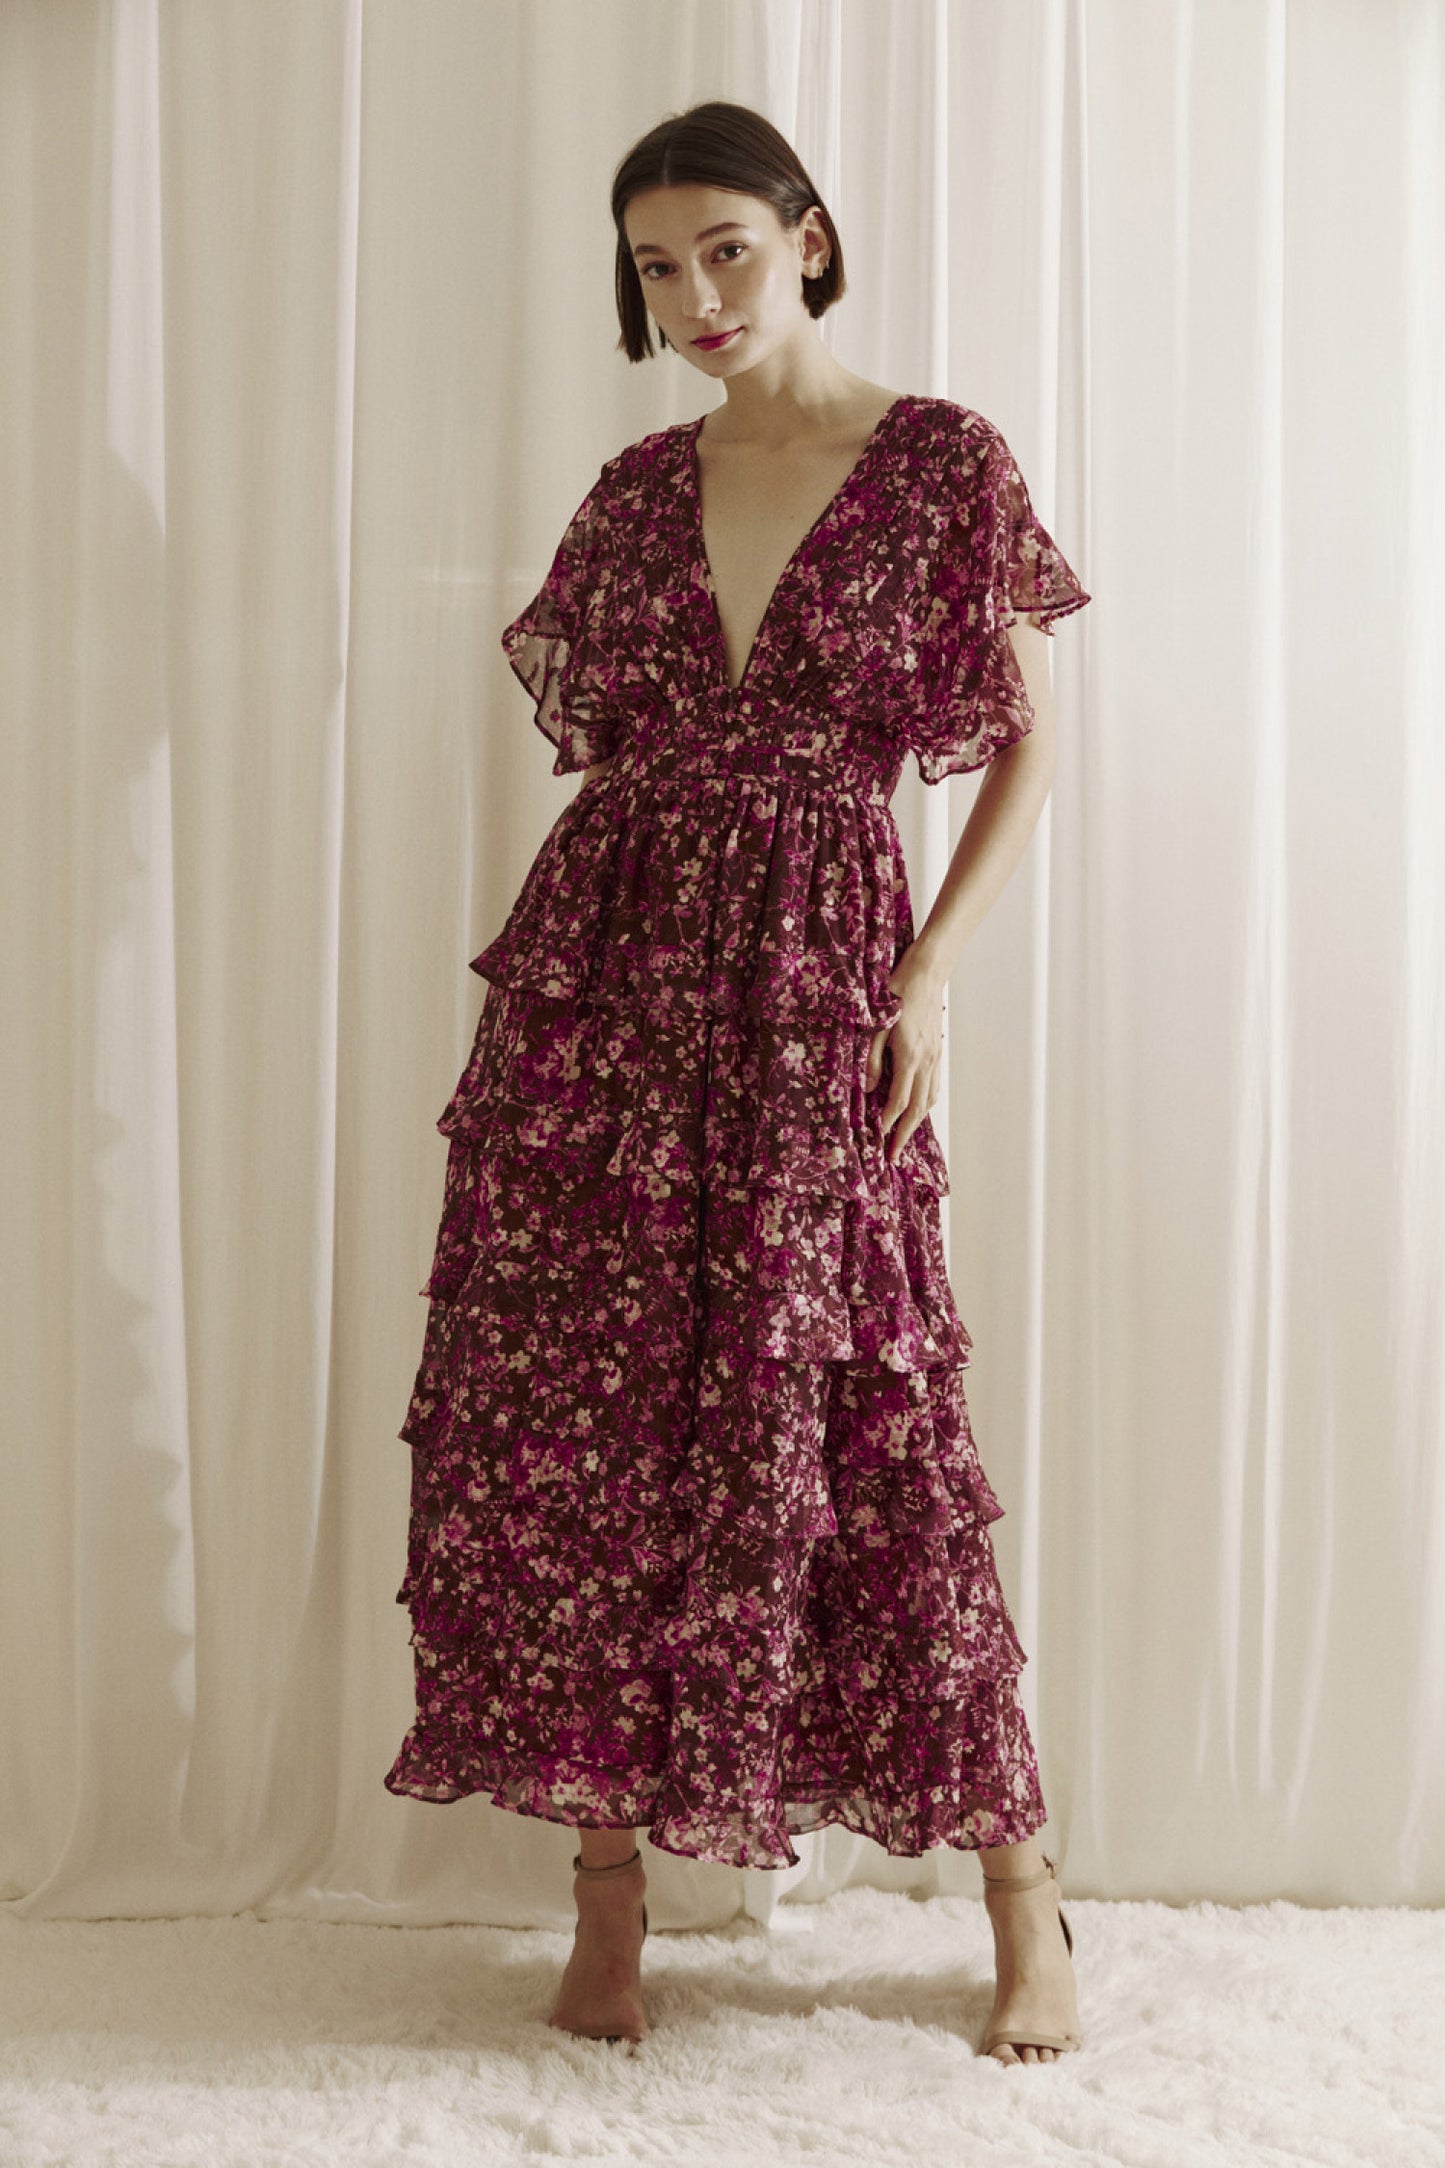 Berry Floral Dress